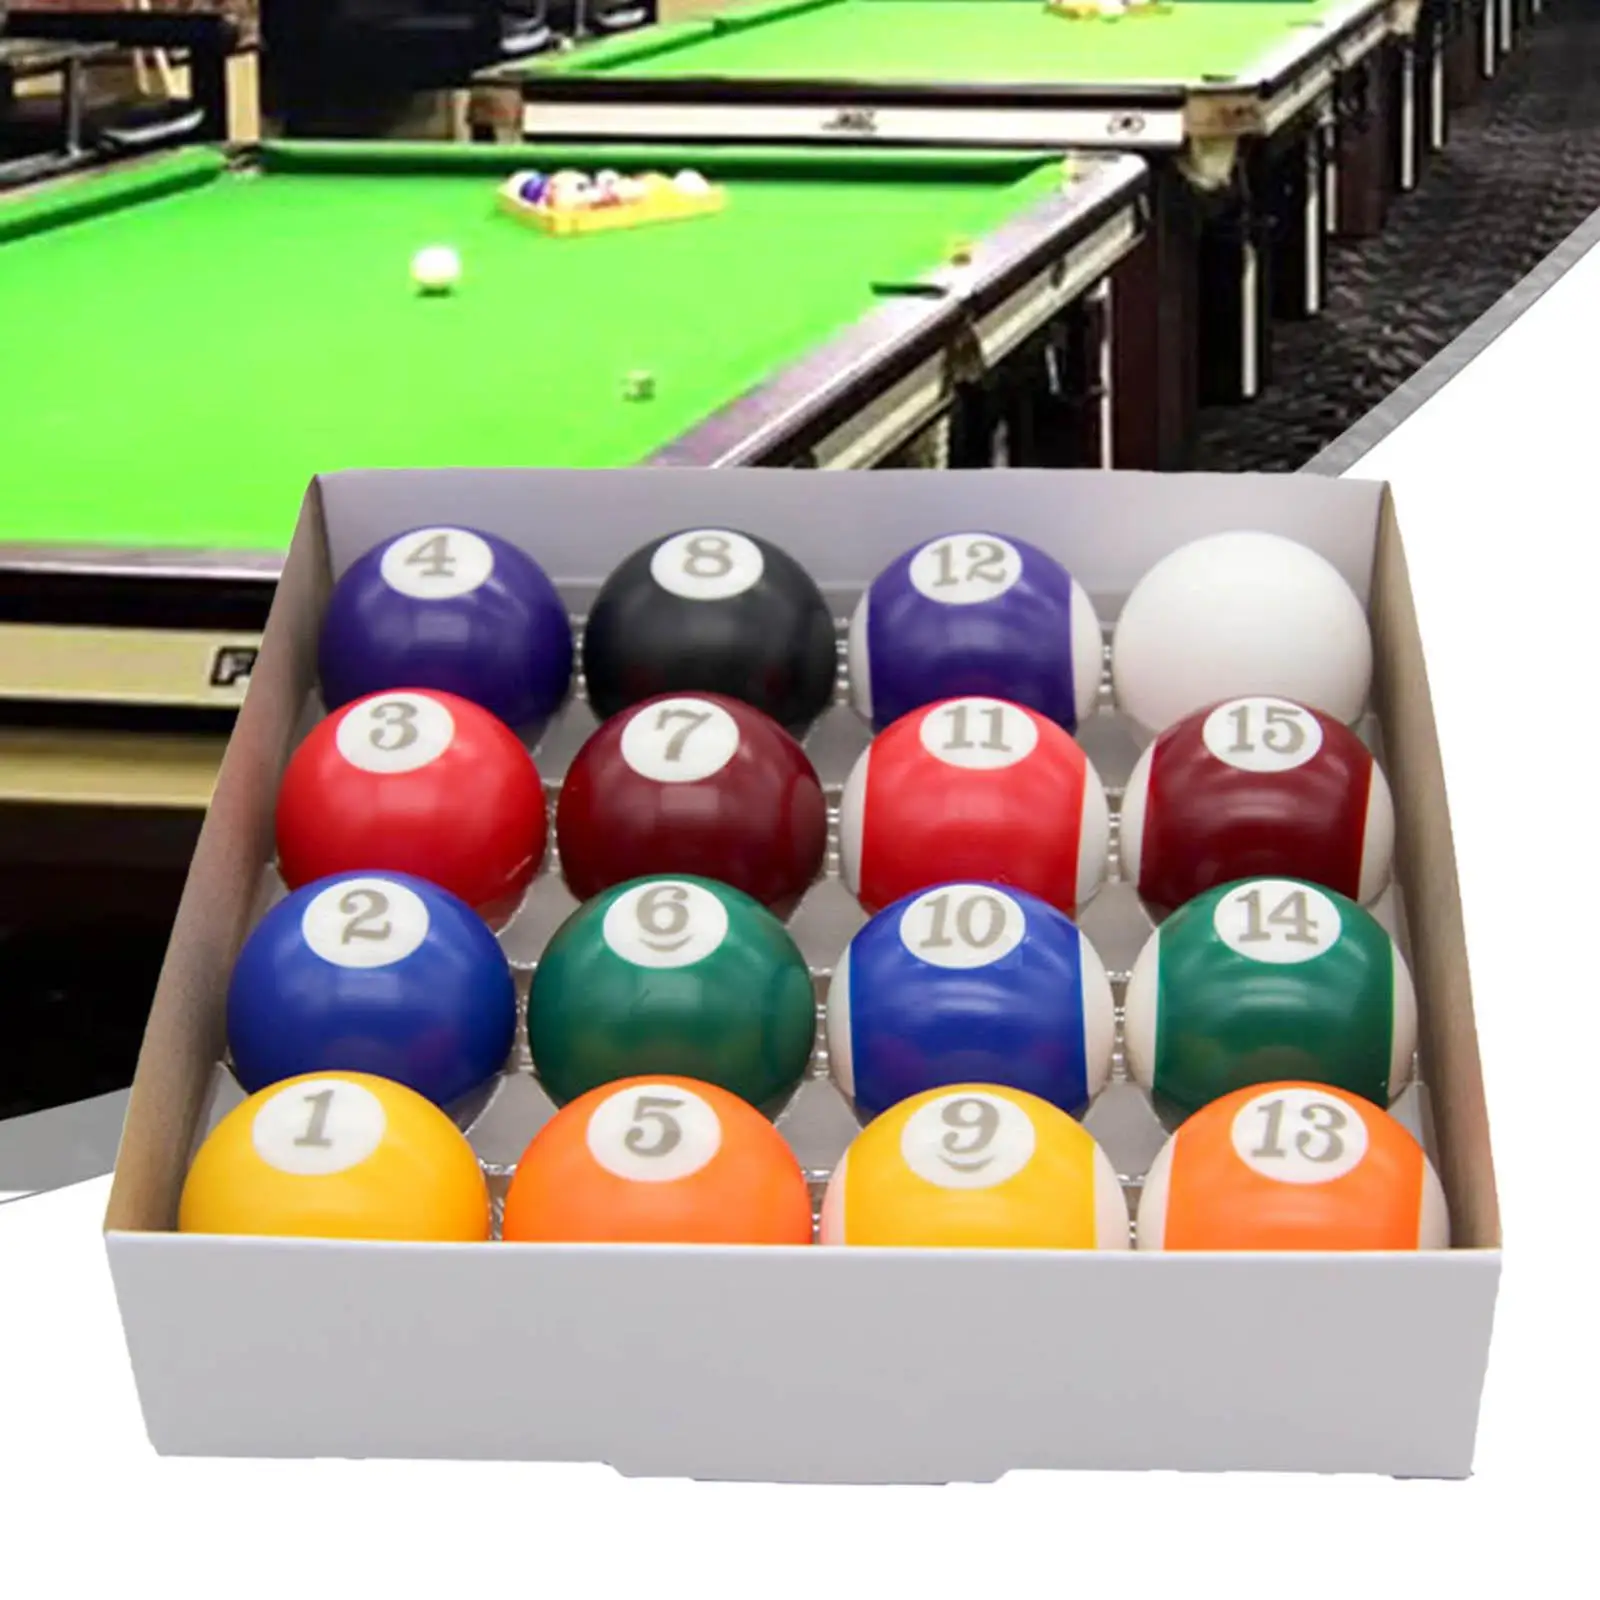 16 Pieces Pool Balls Pool Table Lightweight Multipurpose Resin Billiard Ball Set for Leisure Recreation Desktop Game Rooms Bars